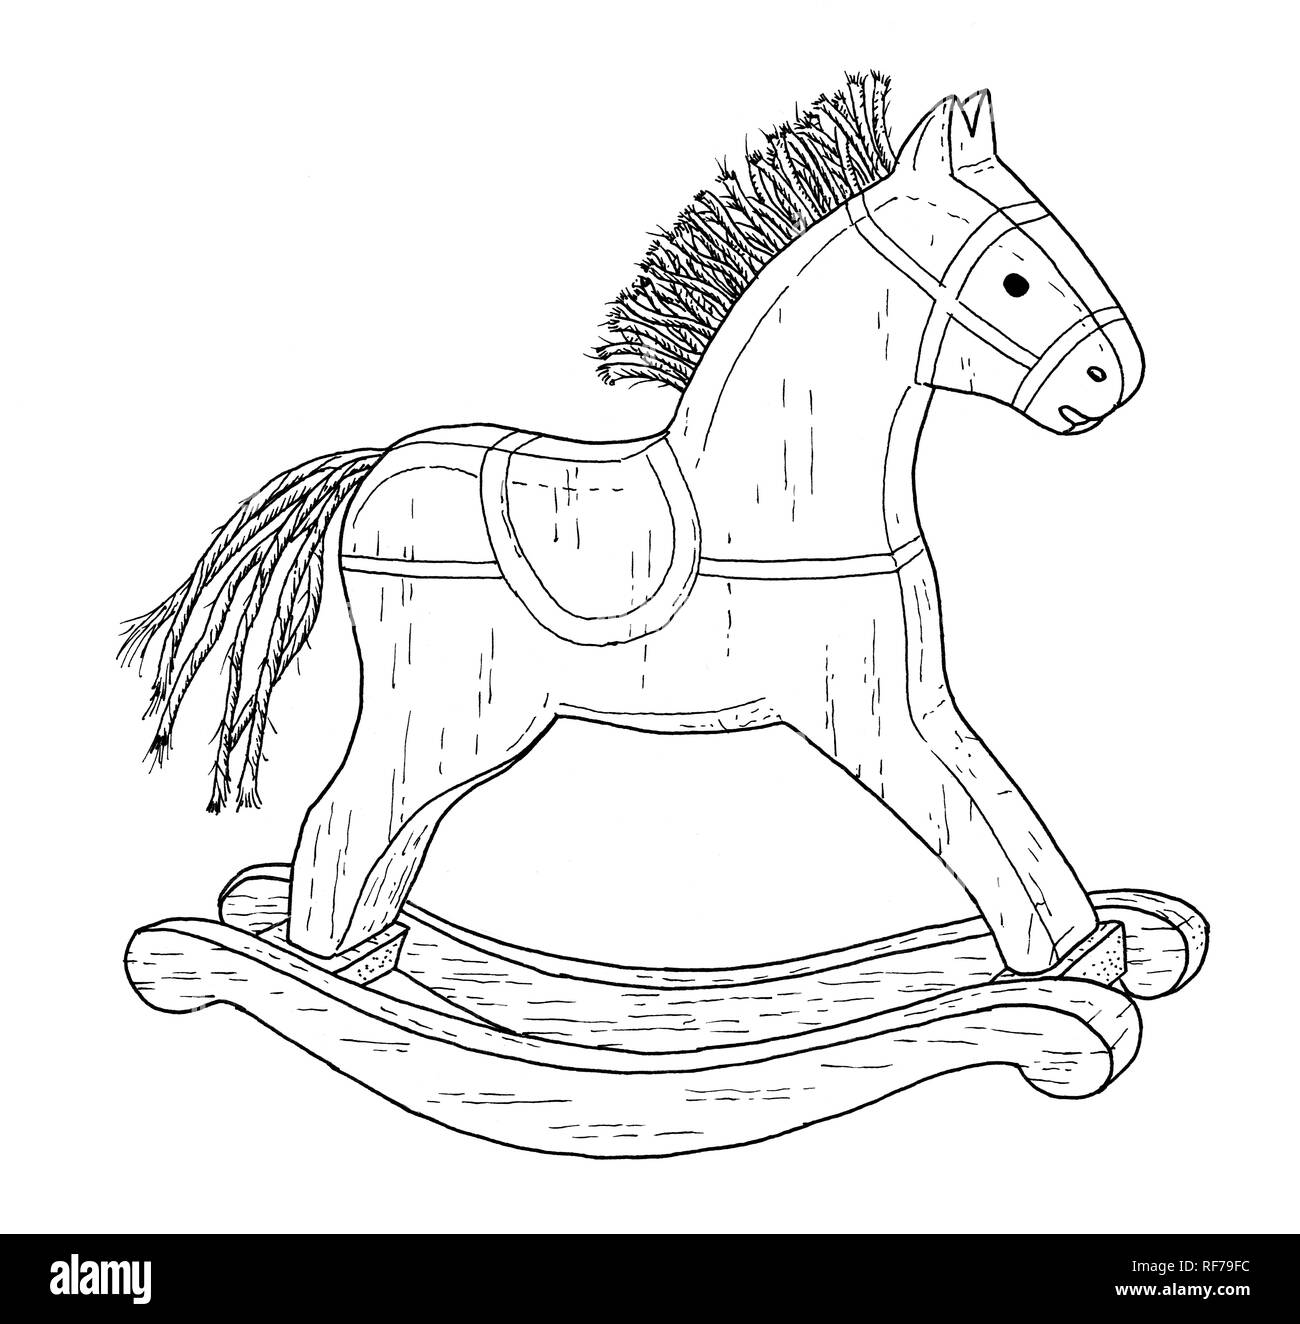 Old style rocking horse drawing - vintage like illustration of children toy on white background. Stock Photo